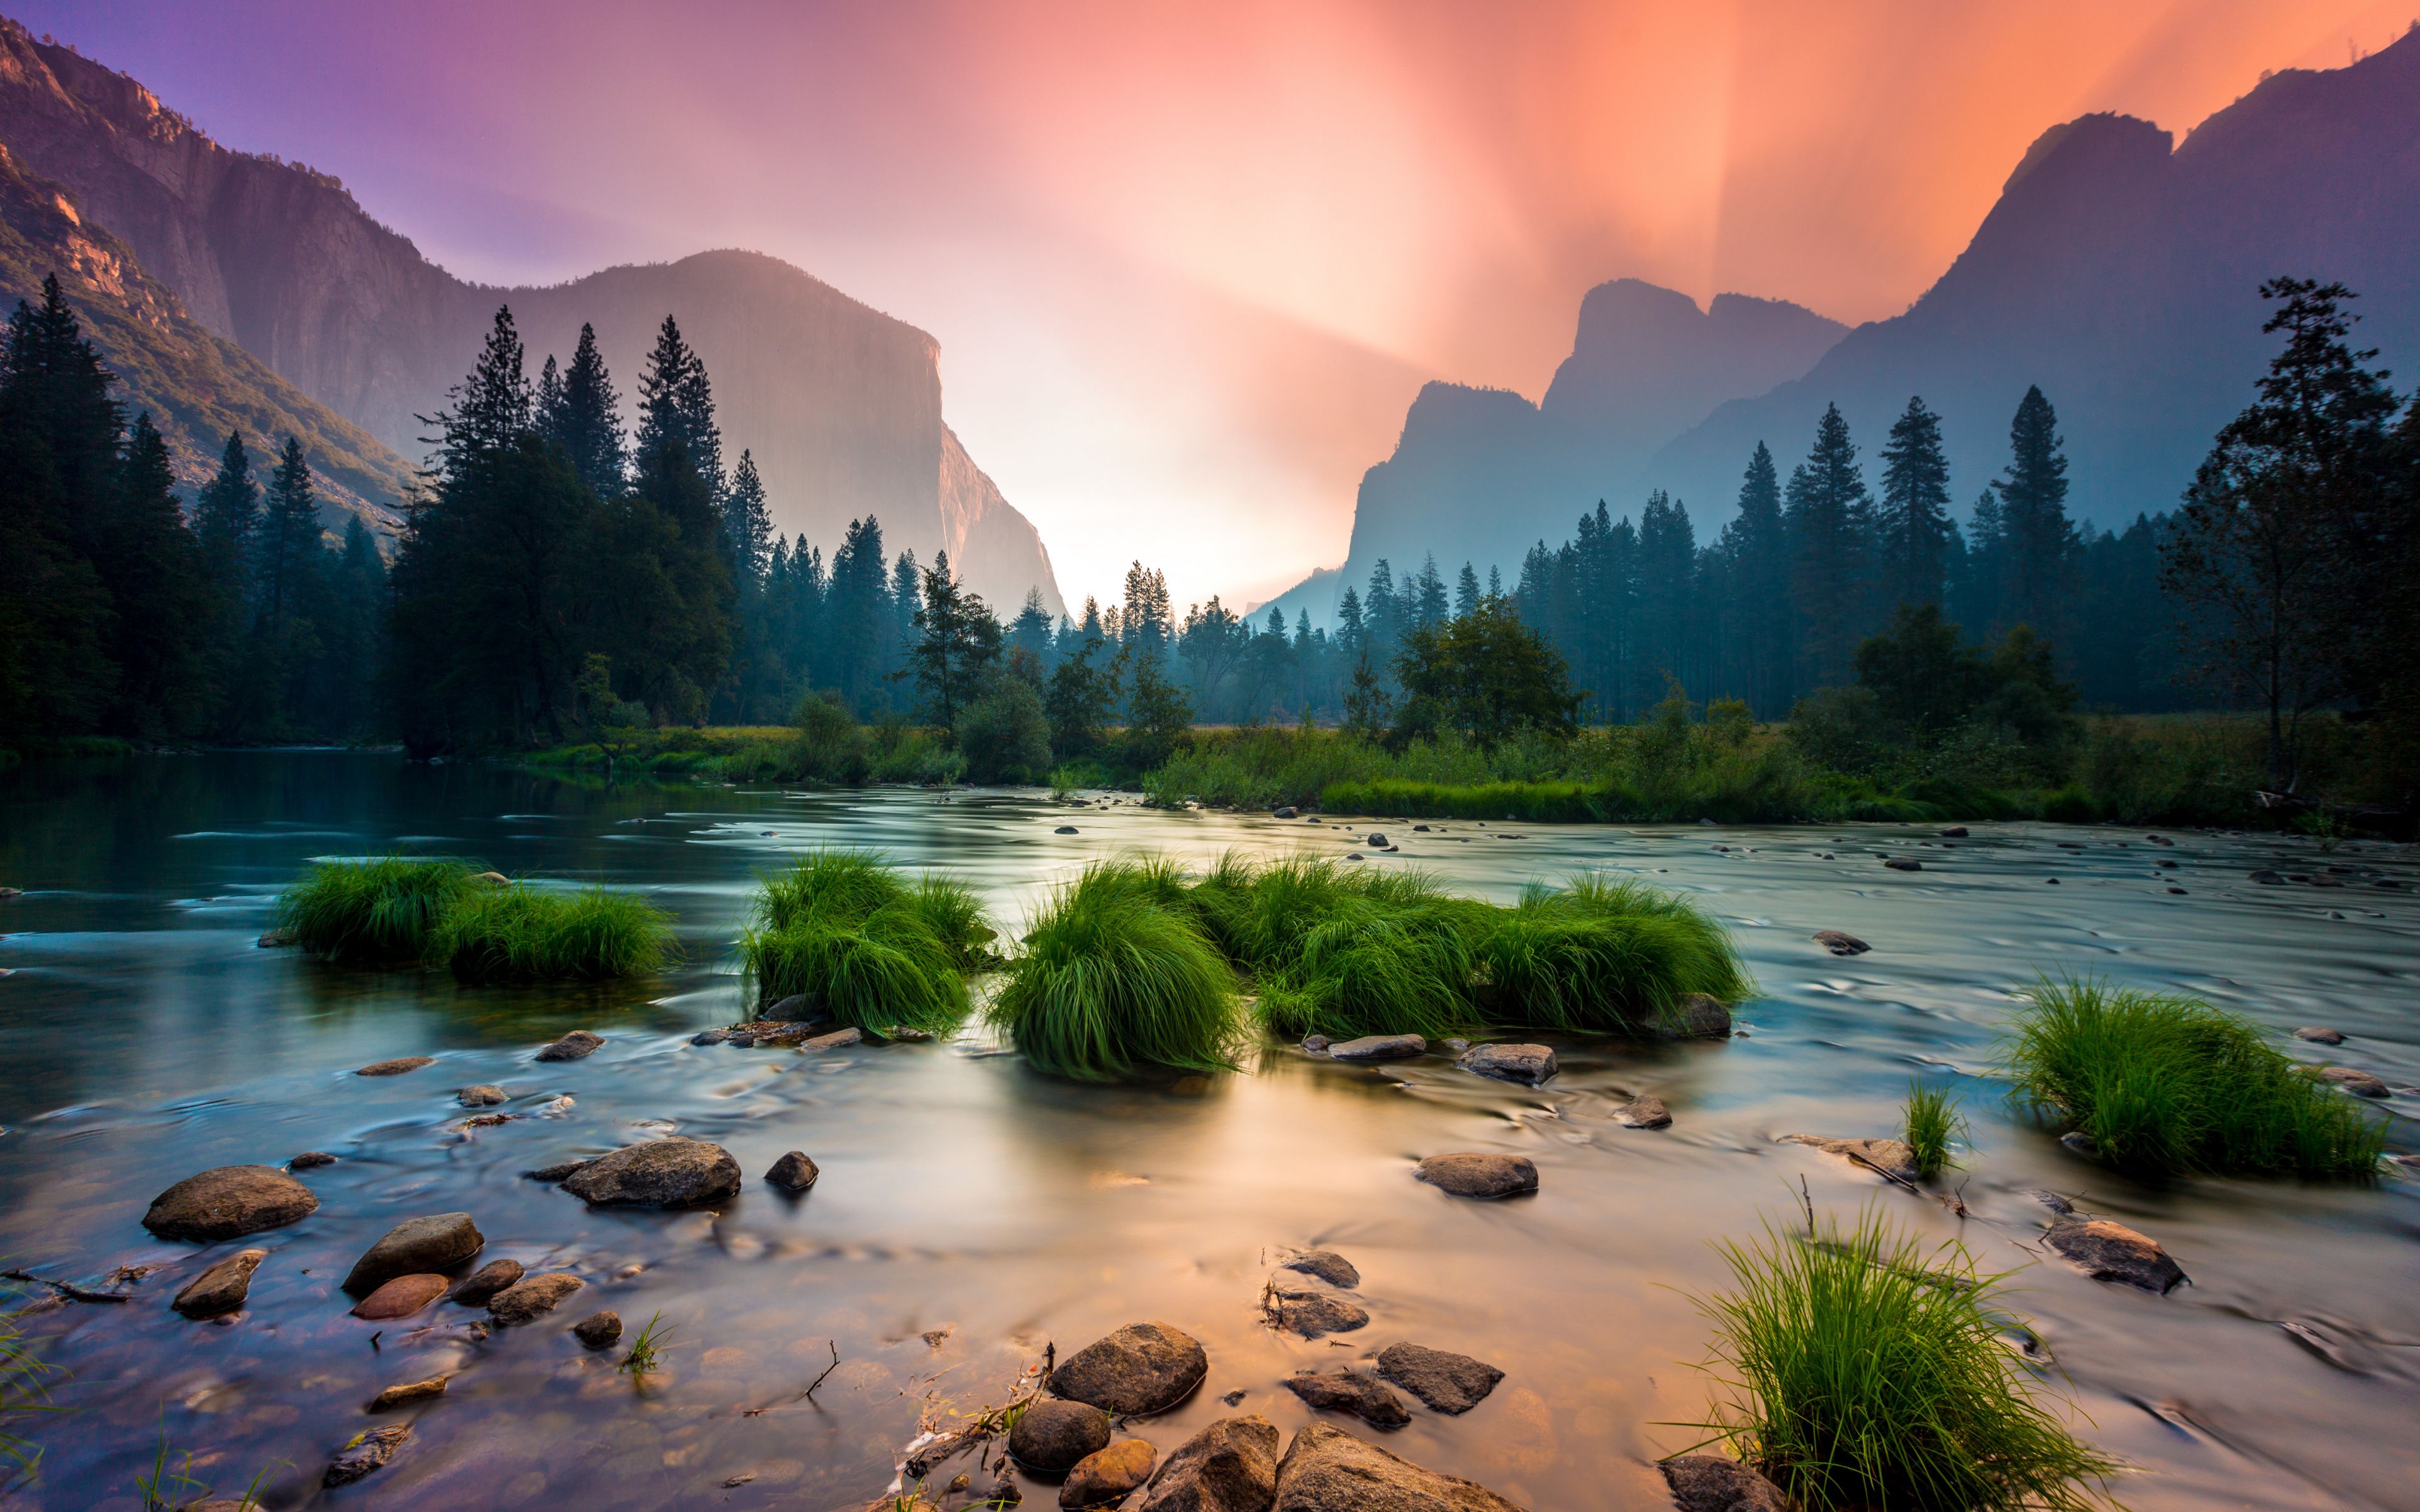 Download Sunrise, Yosemite National Park, stream, mountains wallpaper, 3840x 4K Ultra HD 16: Widescreen